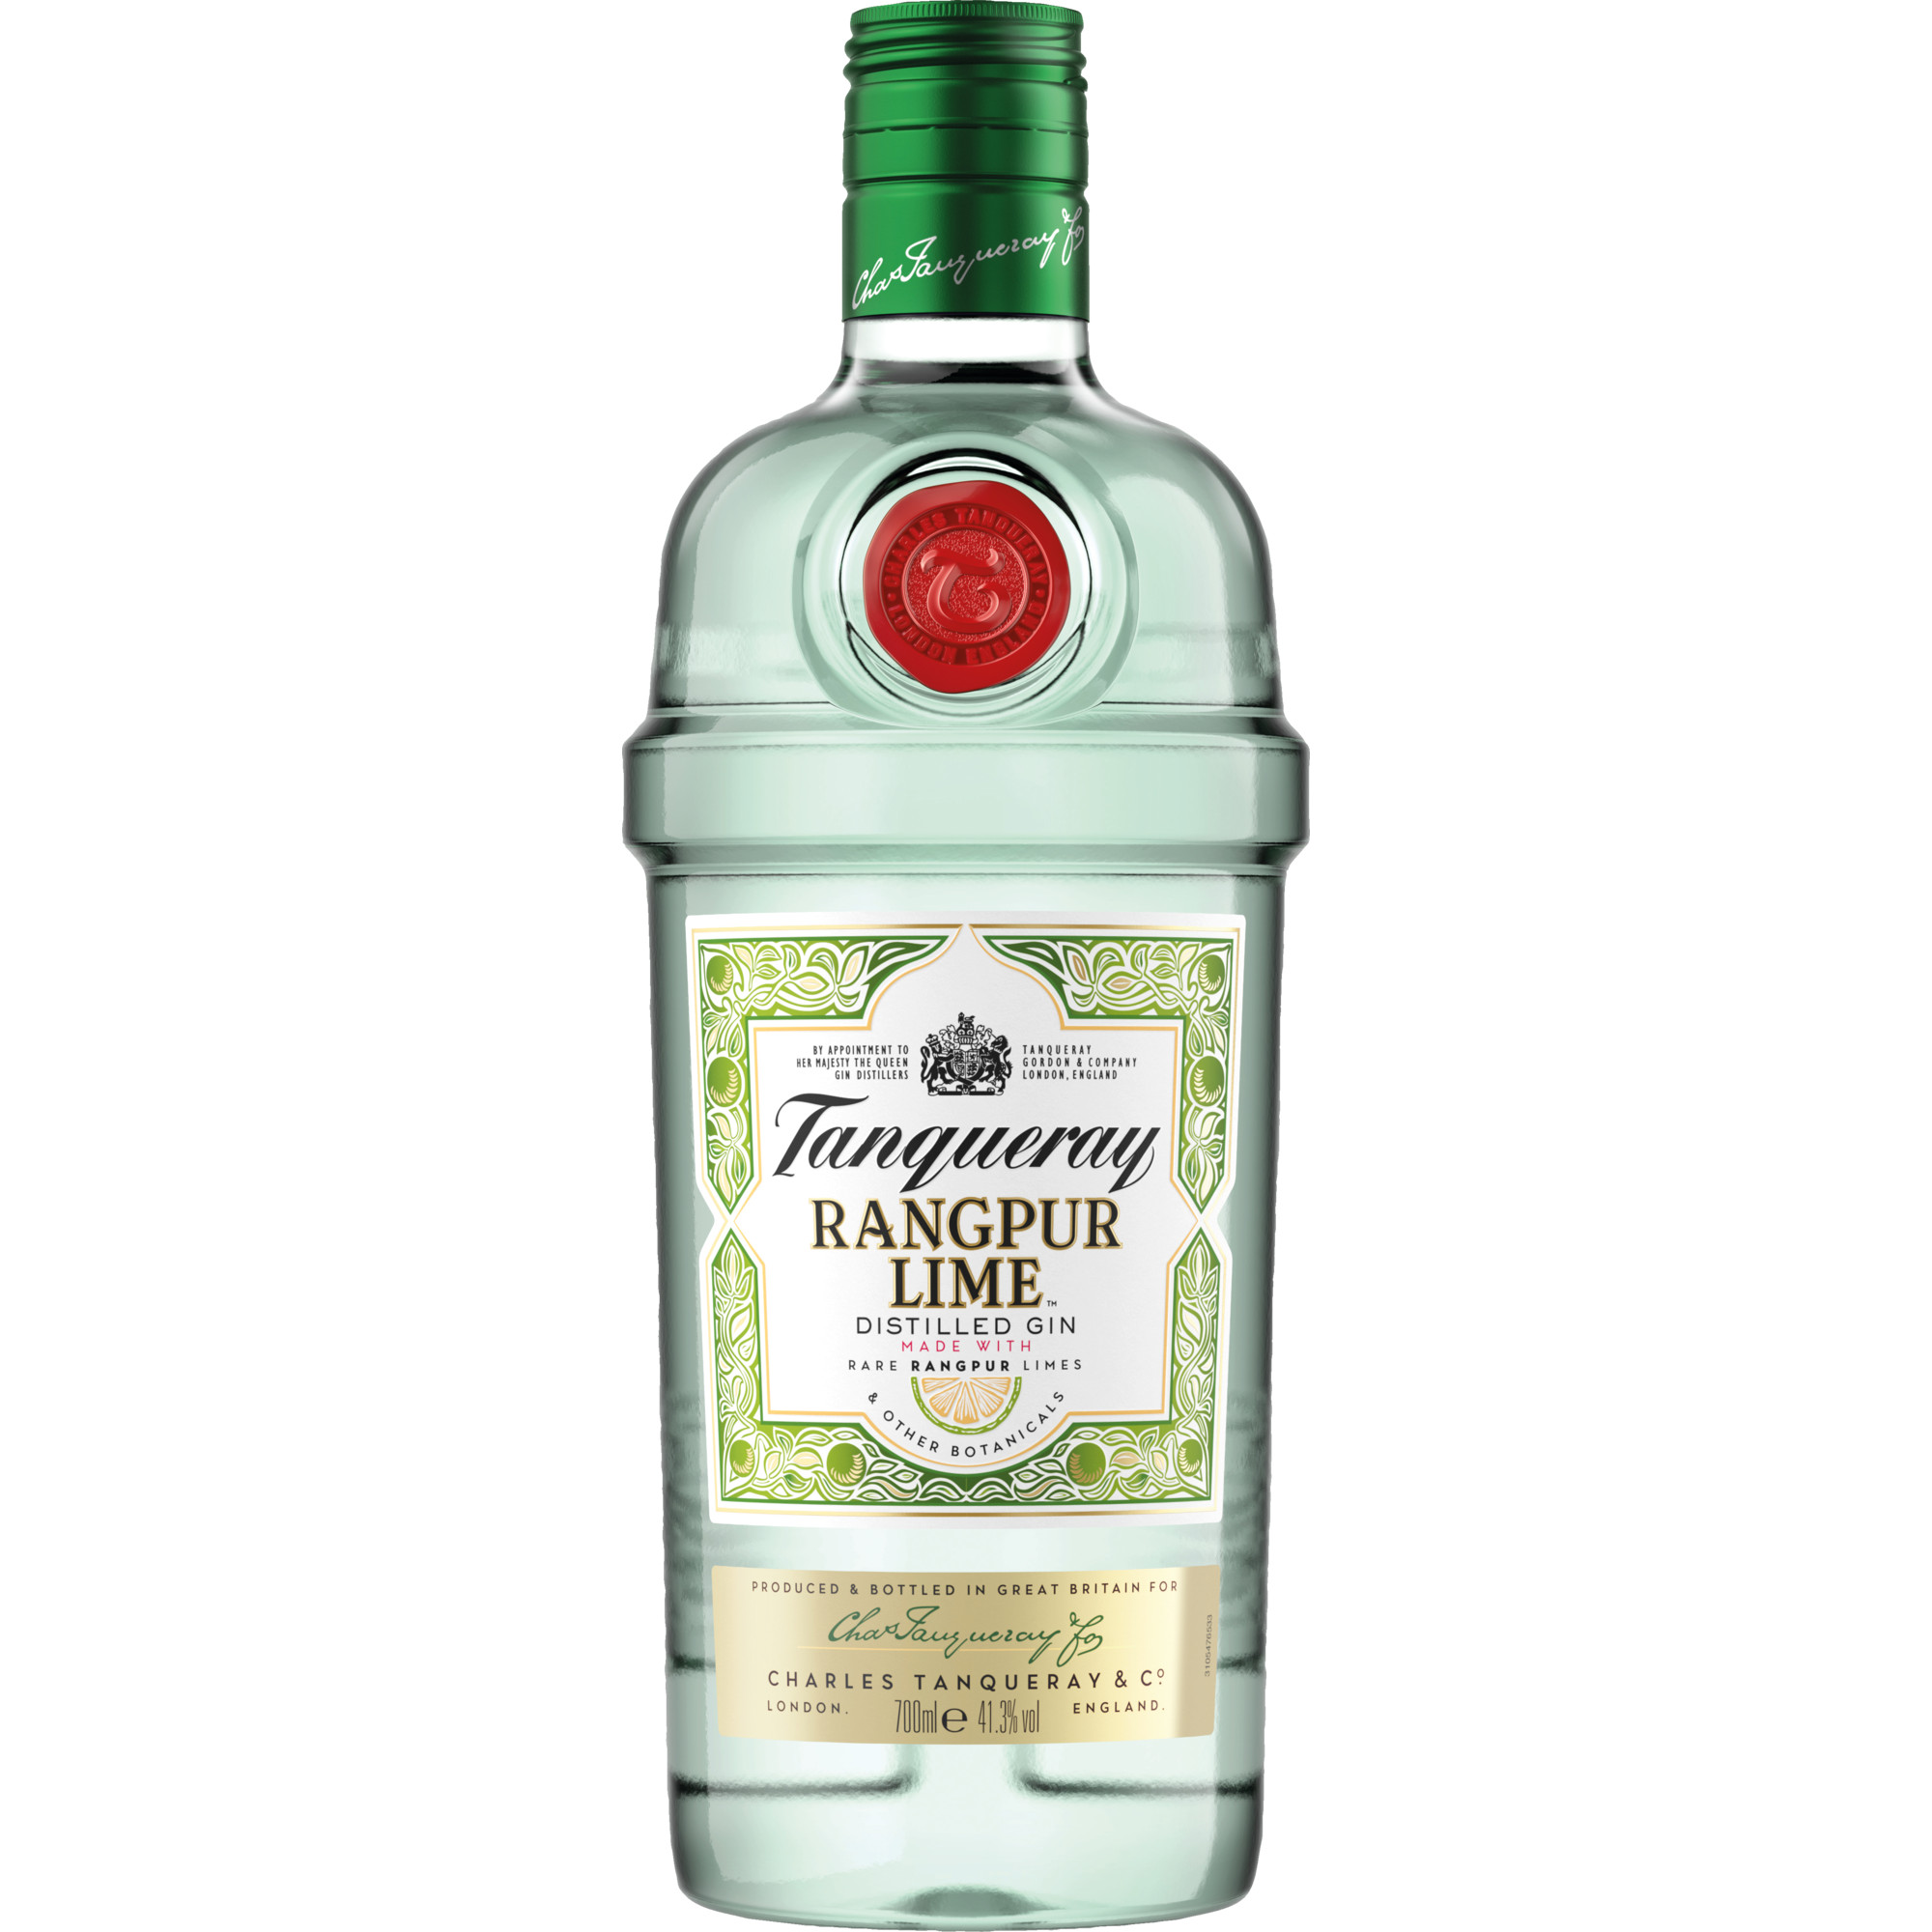 Tanqueray Rangpur Lime Gin, England 0,70 L, 41,3 % Vol., England, Spirituosen  Spirituosen Hawesko